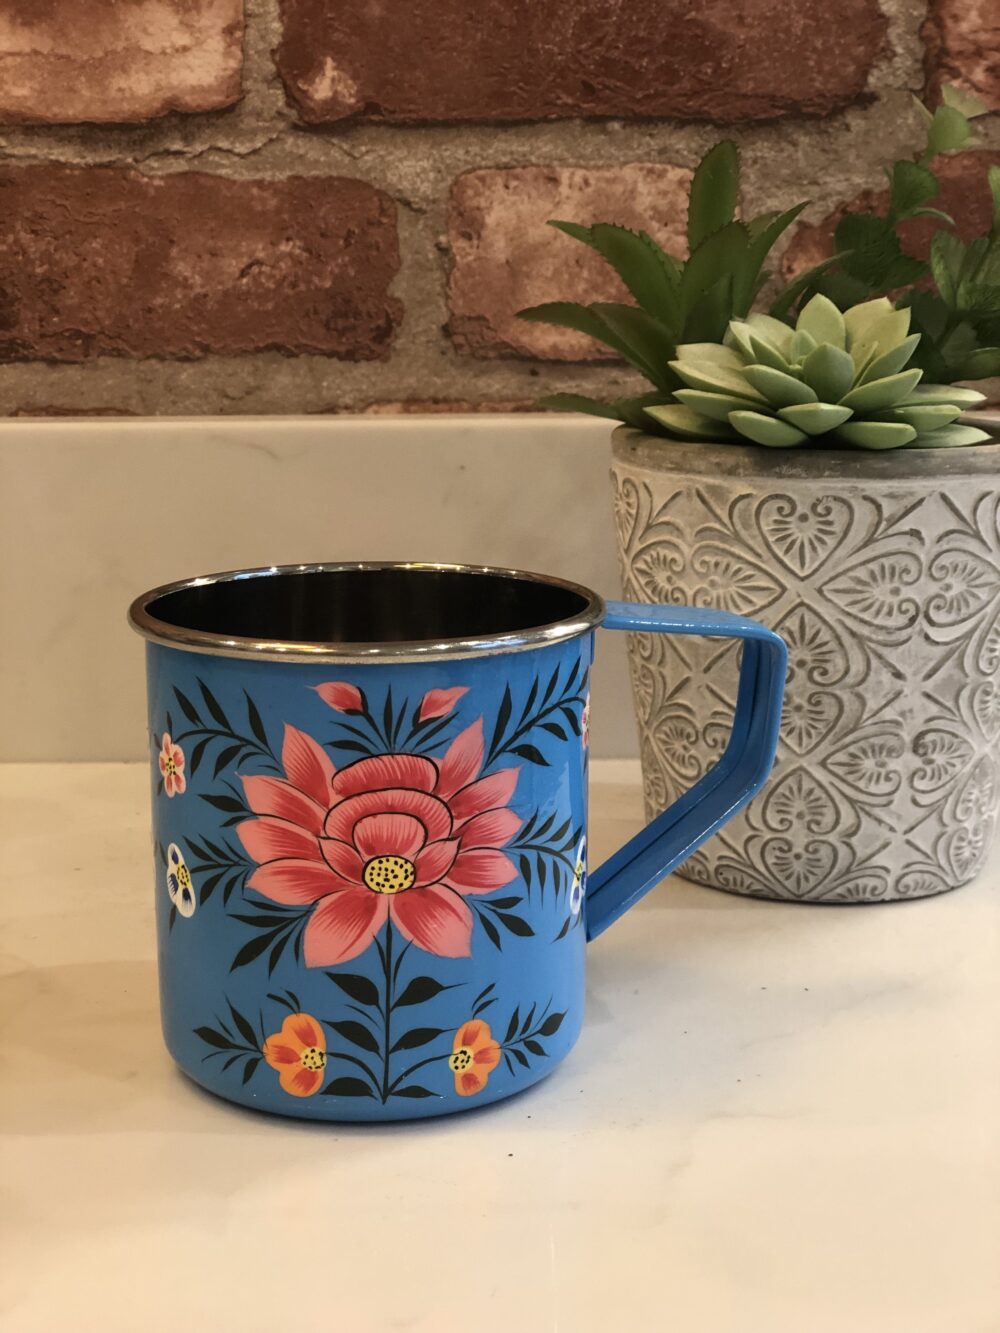 *bright blue enamelware mug from kashmir